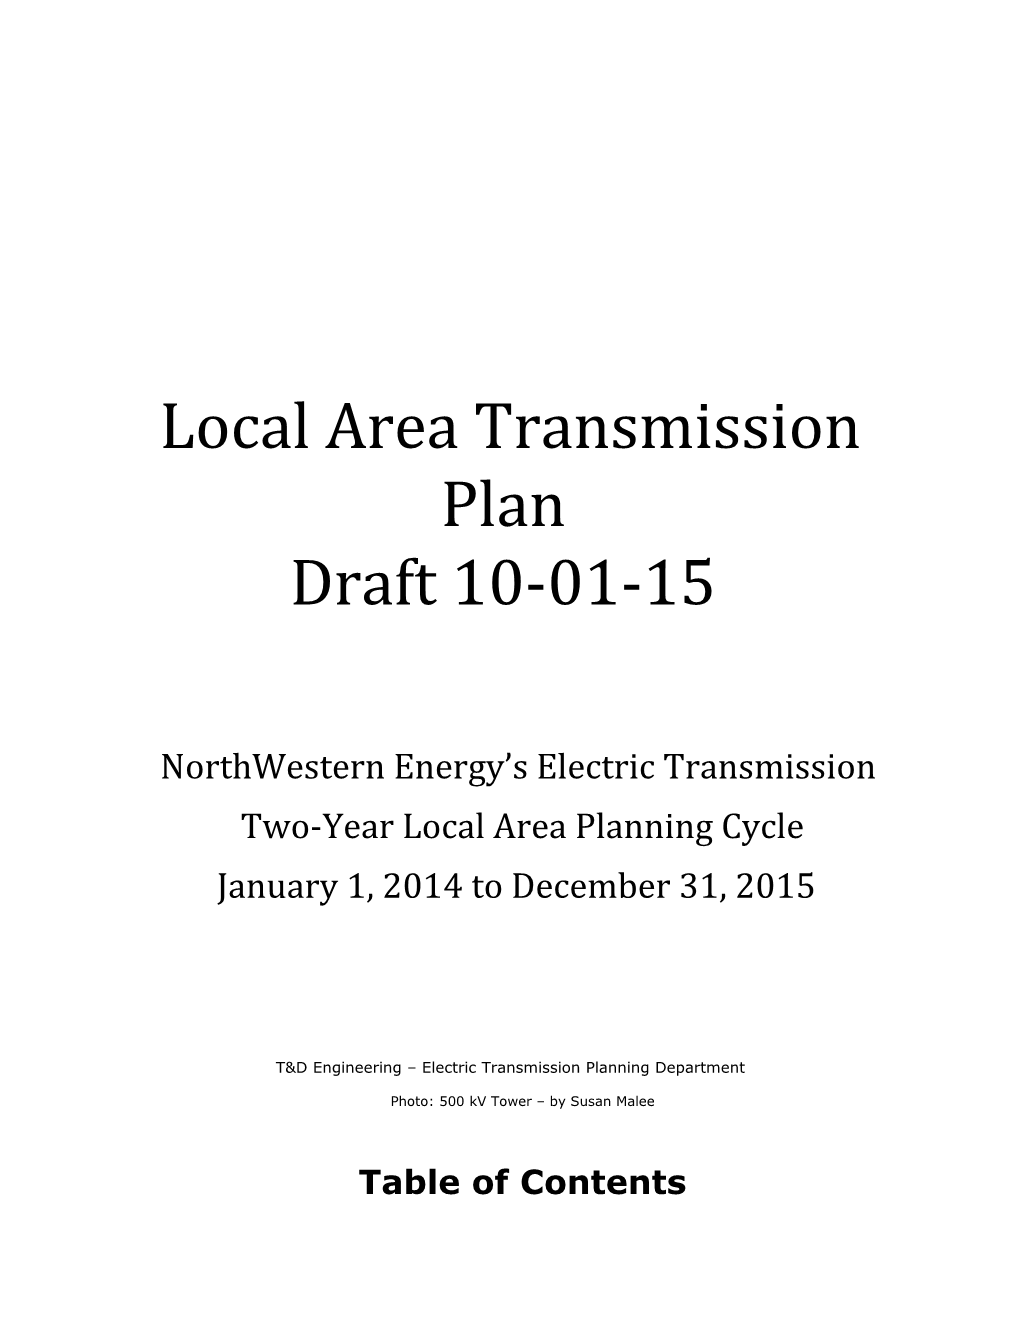 Local Area Transmission Plan